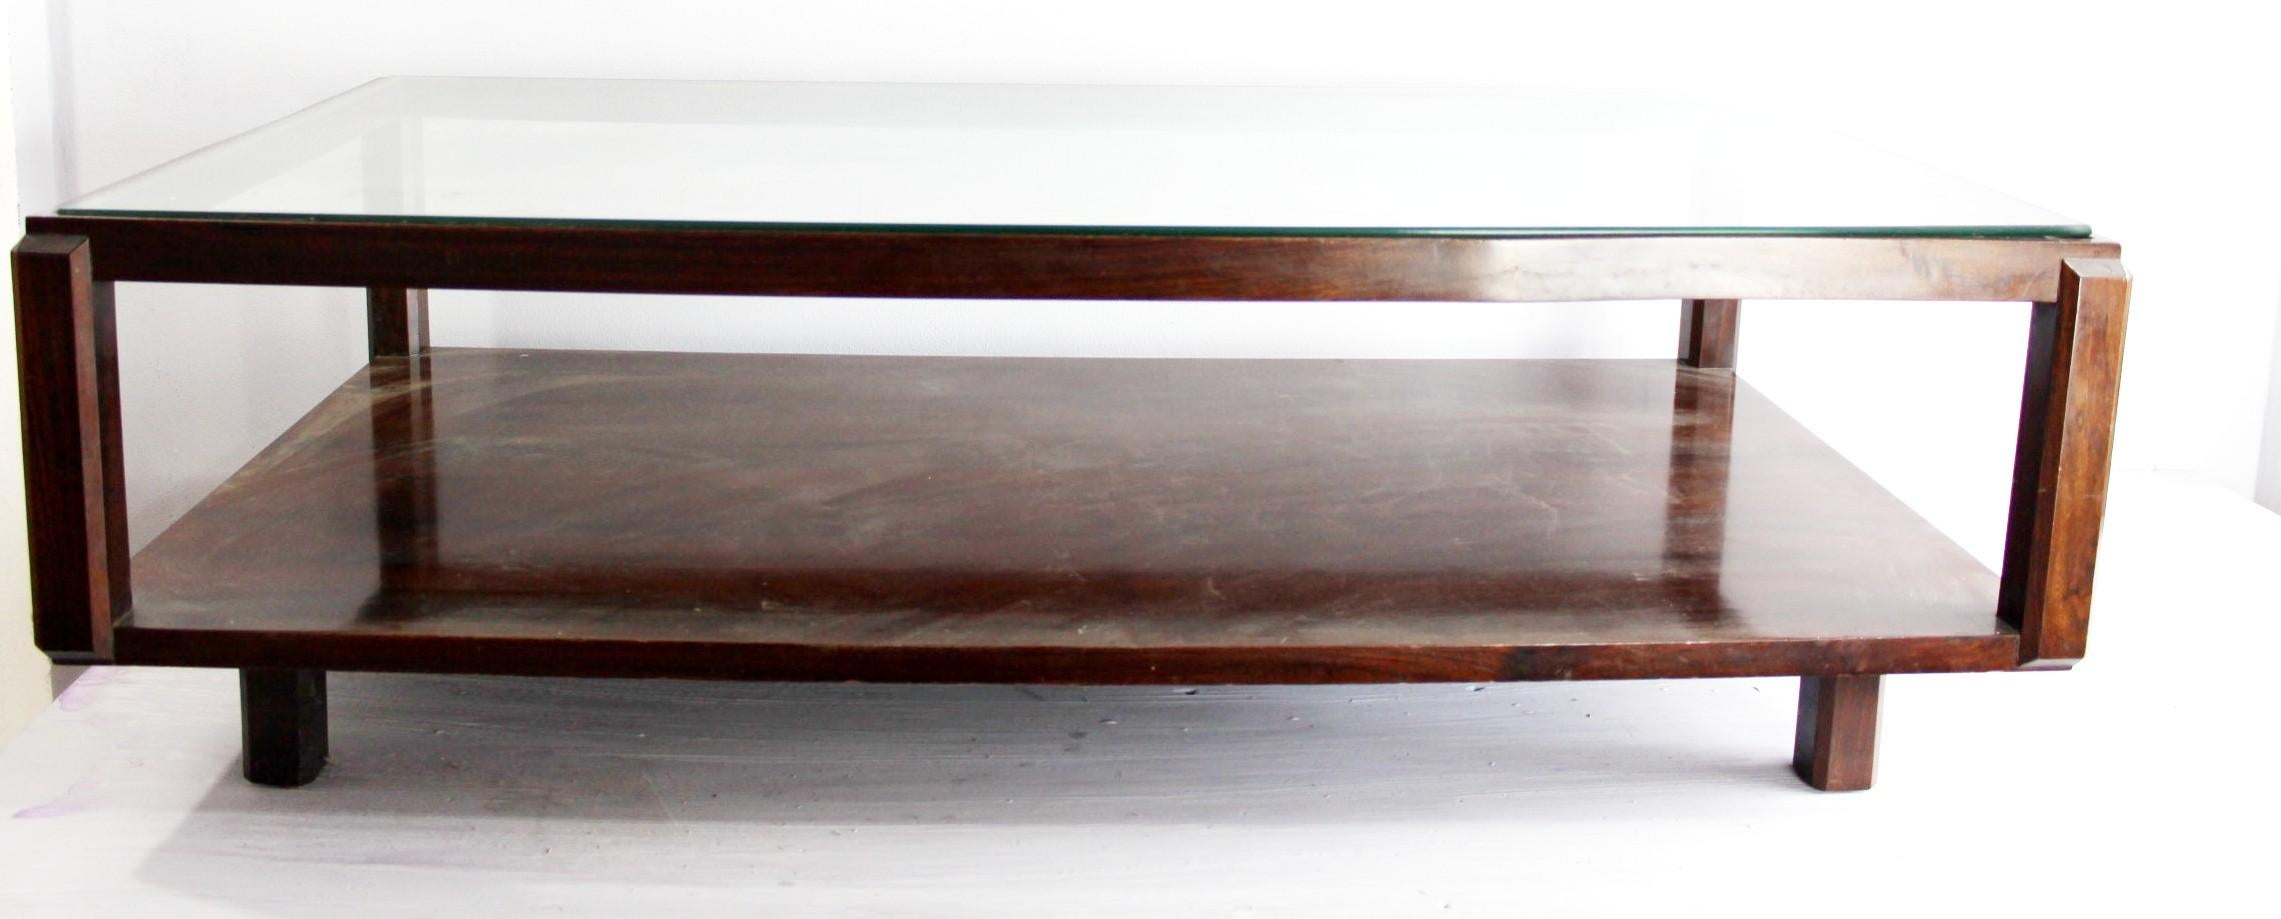 Fait main grande table basse en palissandre massif design italien intelectuel en vente